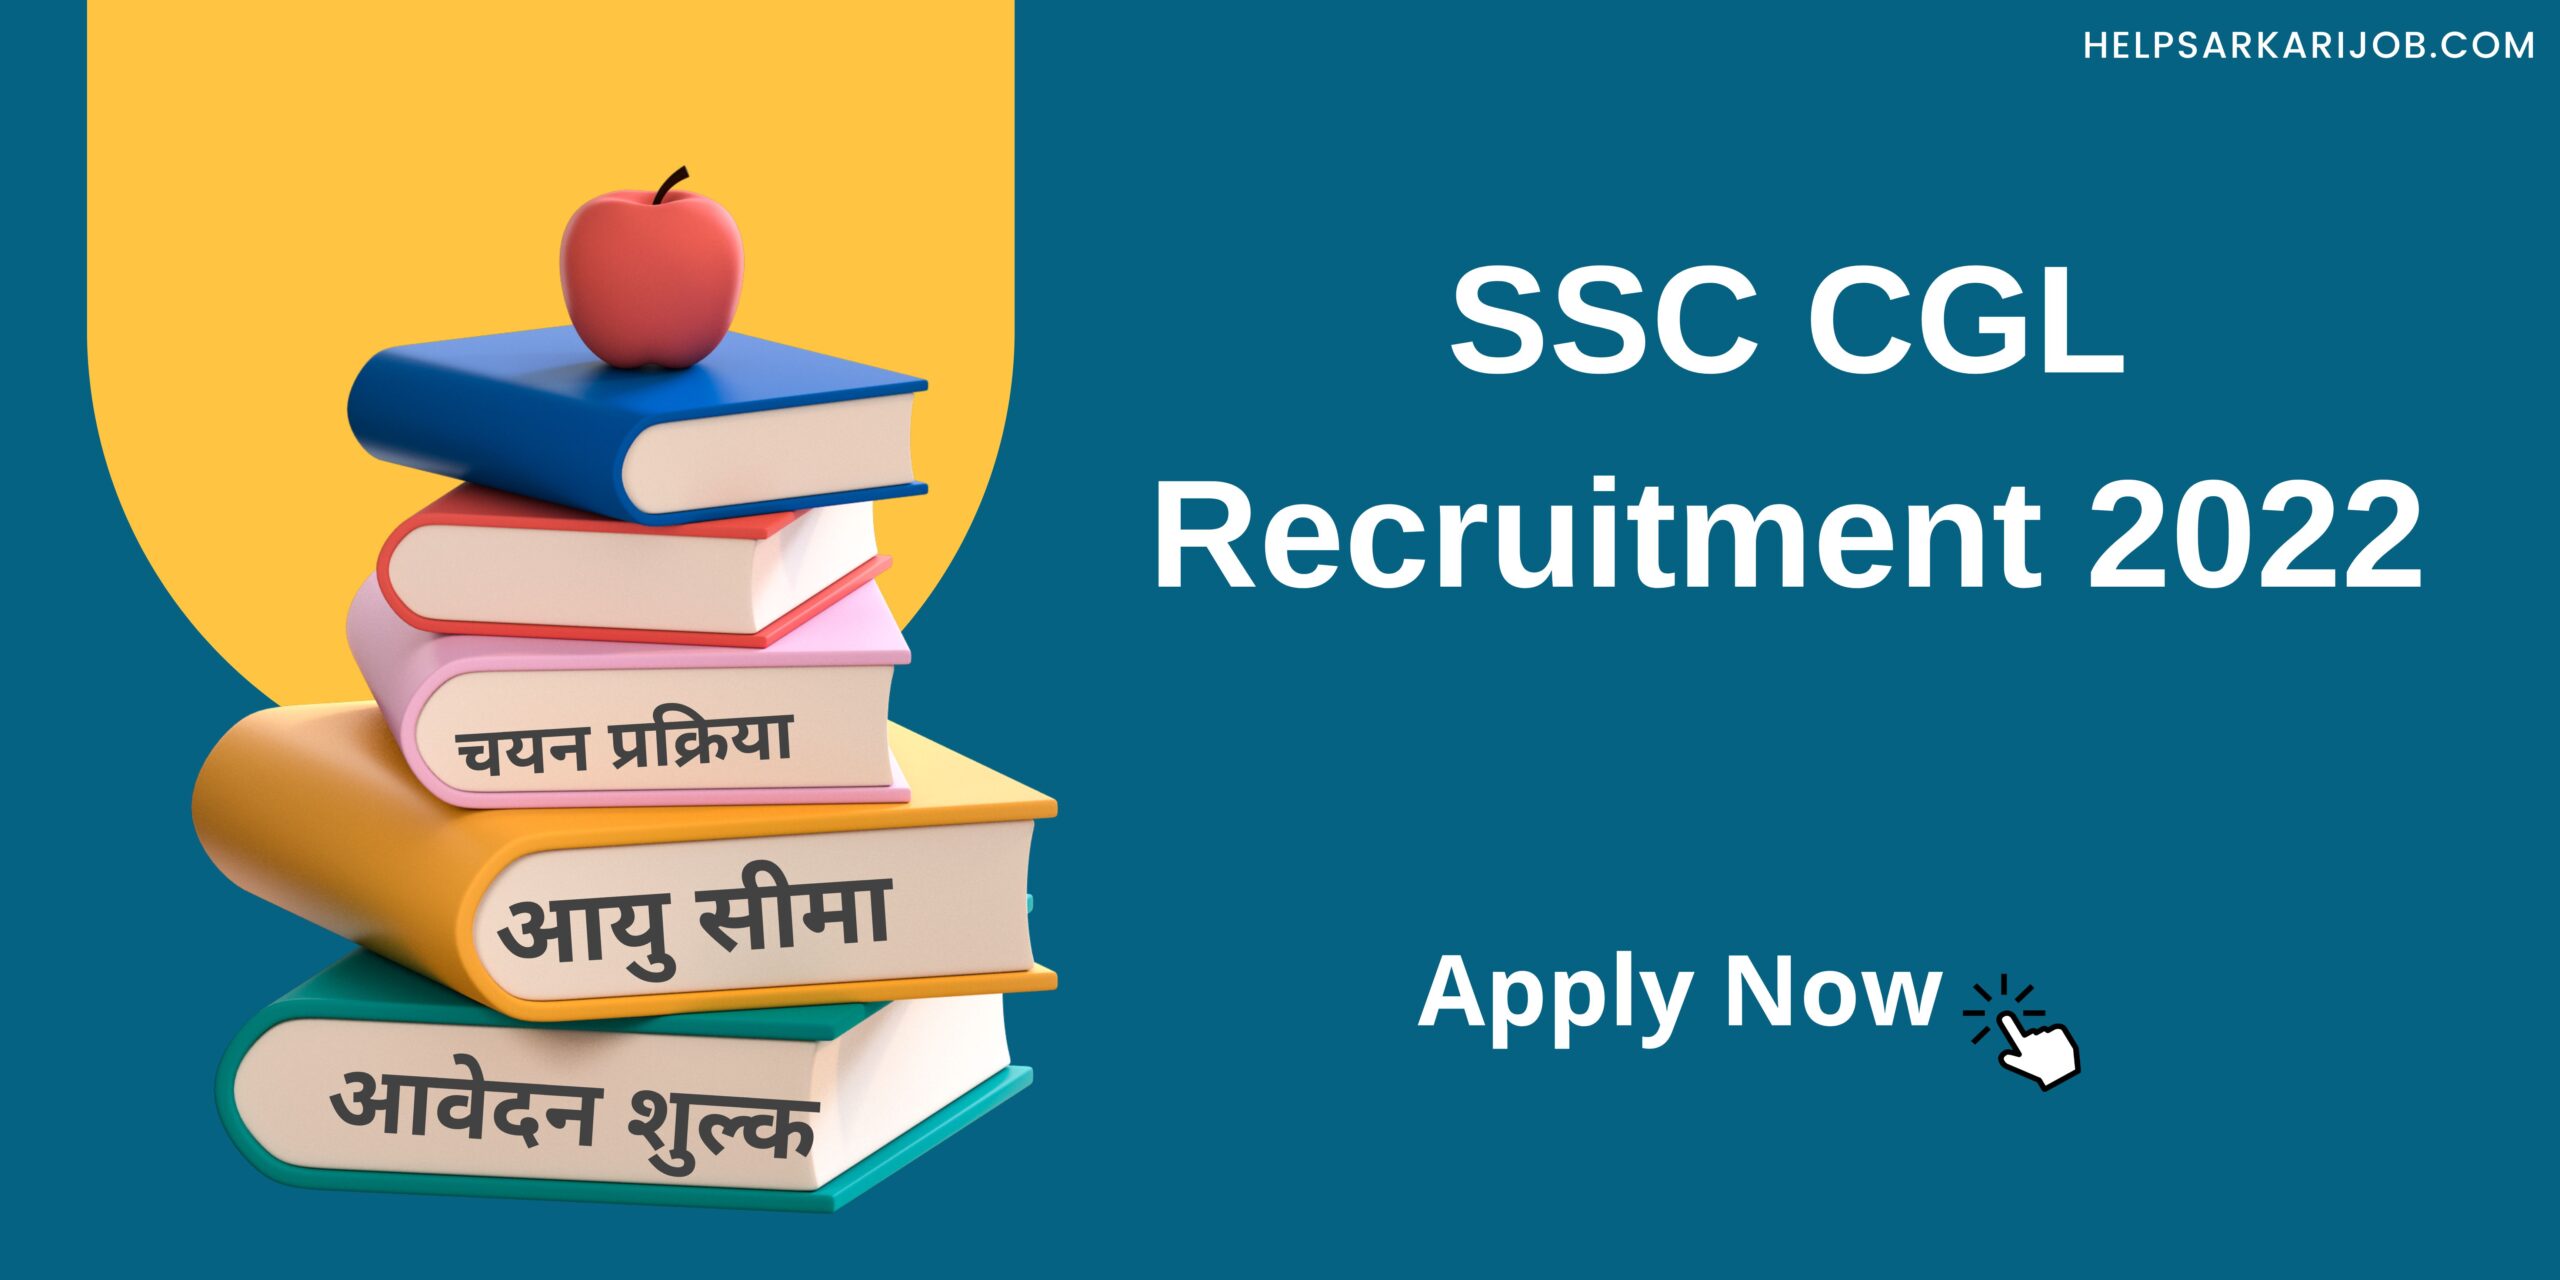 SSC CGL Recruitment 2022 1 scaled -